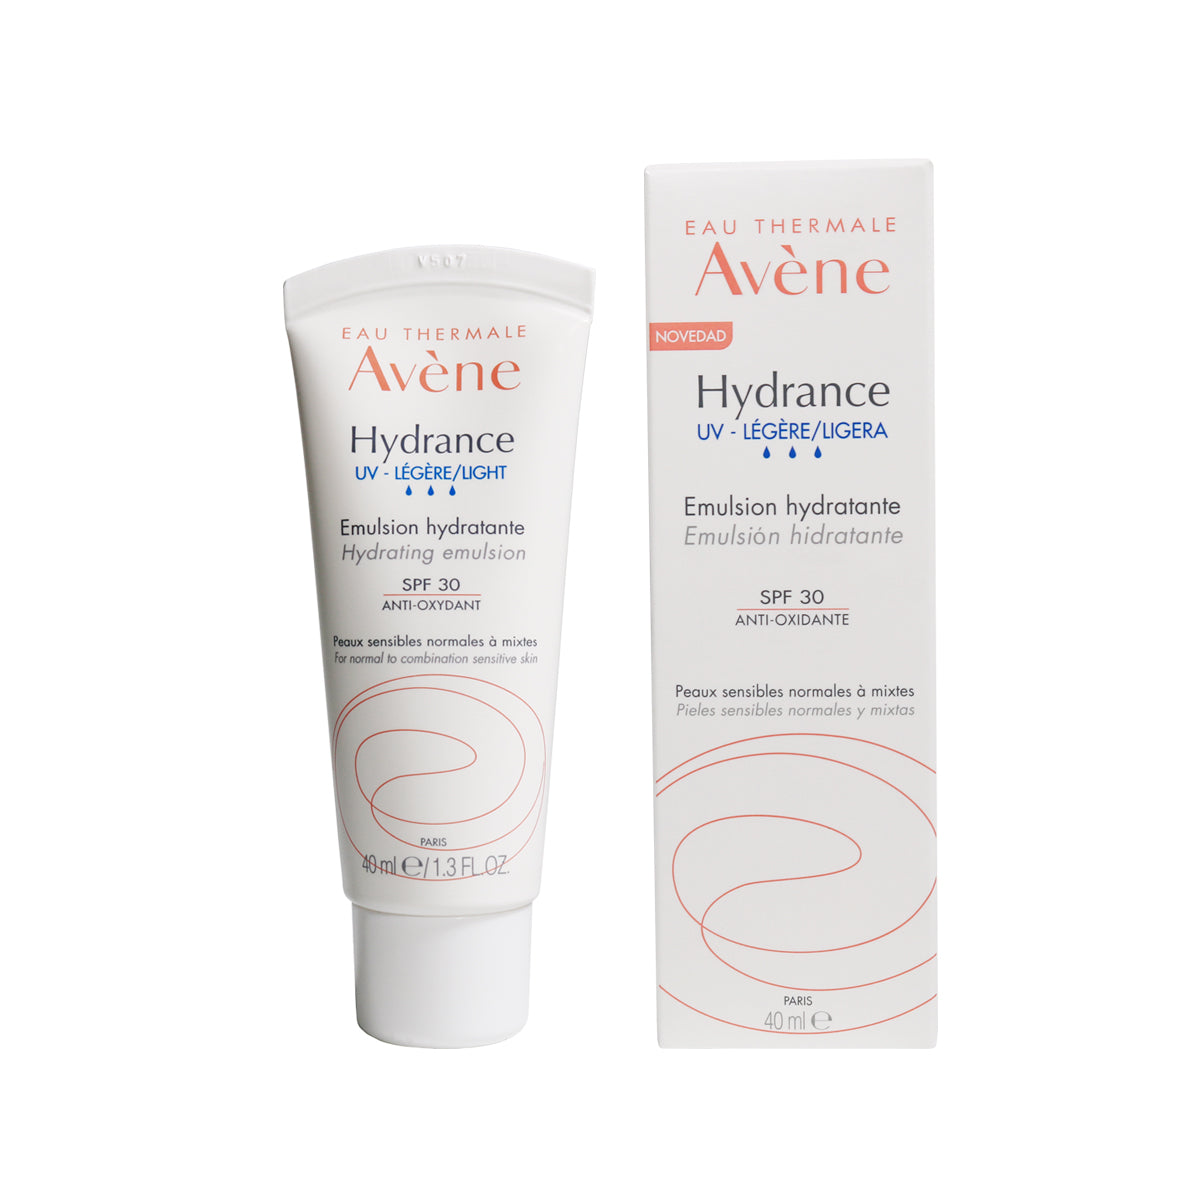 Avene Hydrance ligera UV FPS30, Hidratante para piel deshidratada y sensible 40ml.